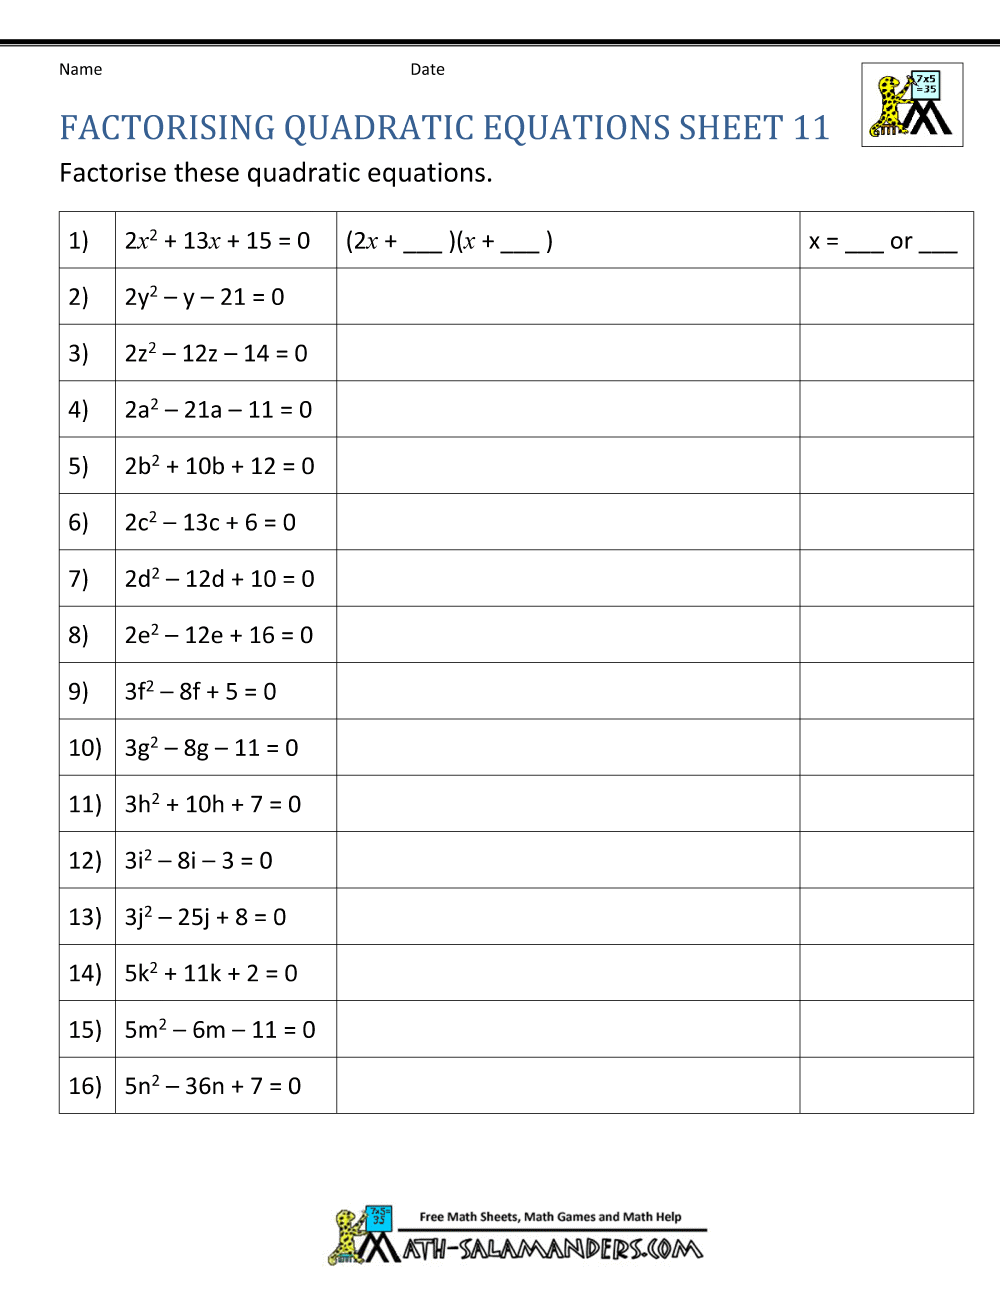 Factoring Quadratic Equations For Quadratic Equations Word Problems Worksheet